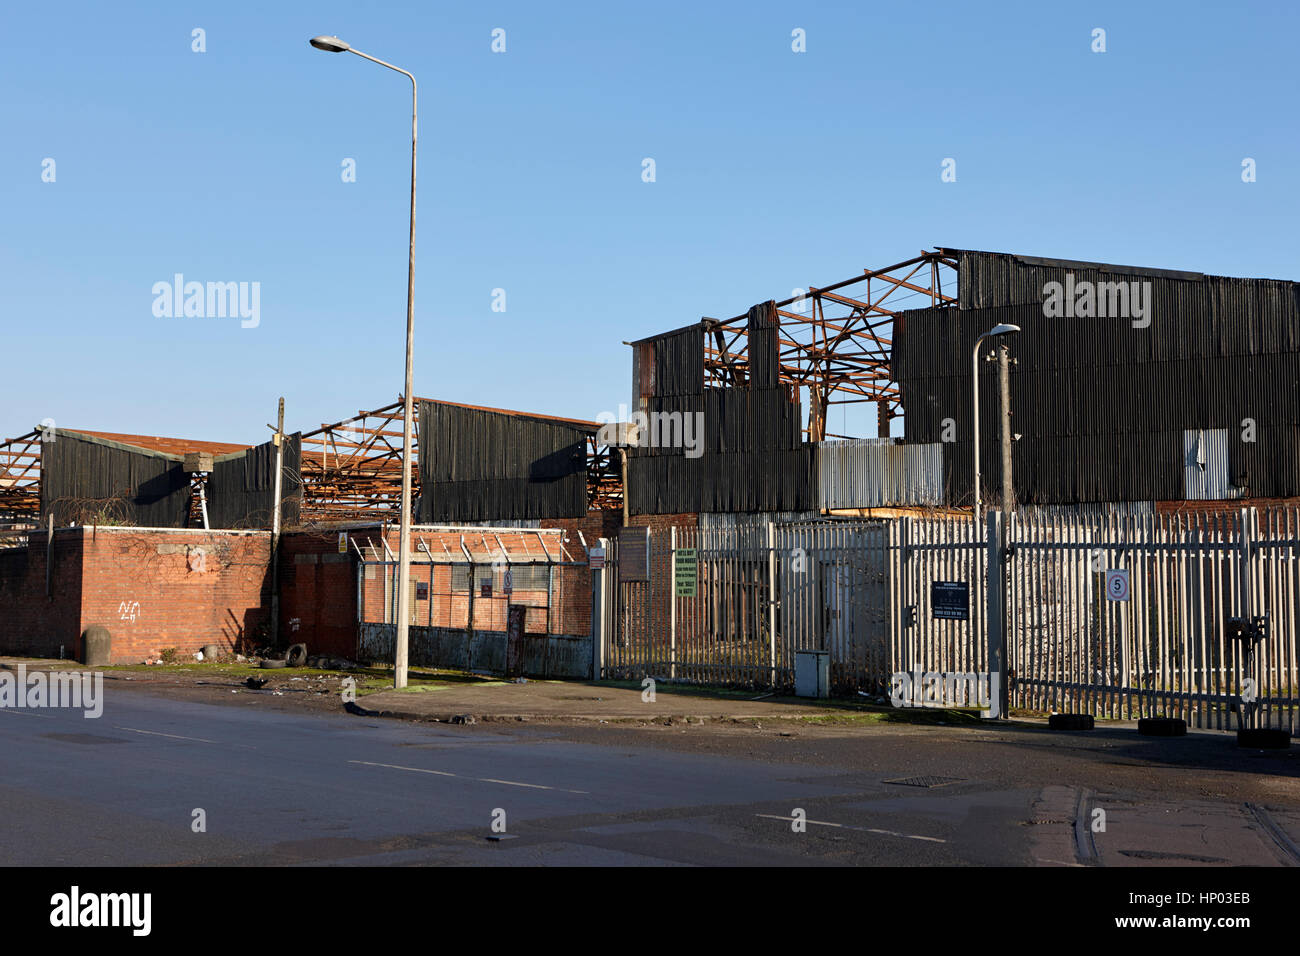 veralteten Gebäuden im Regent Straße Huskisson dock Kirkdale Liverpool uk Stockfoto